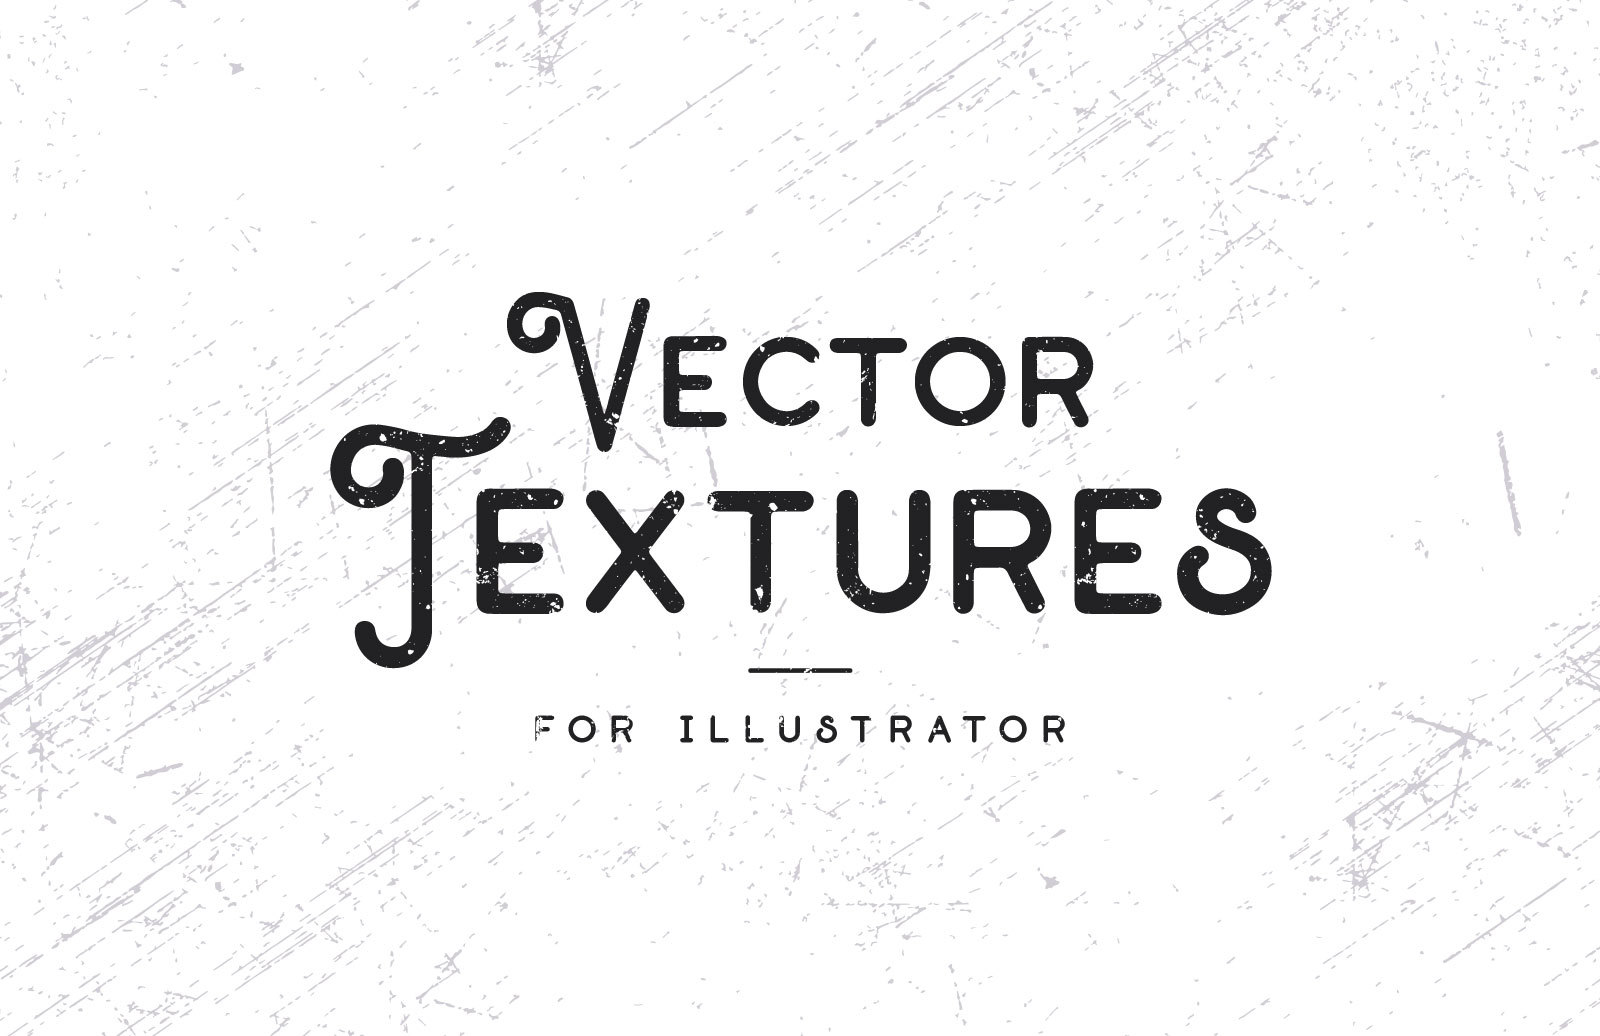 Kpt vector effects for illustrator download windows 7